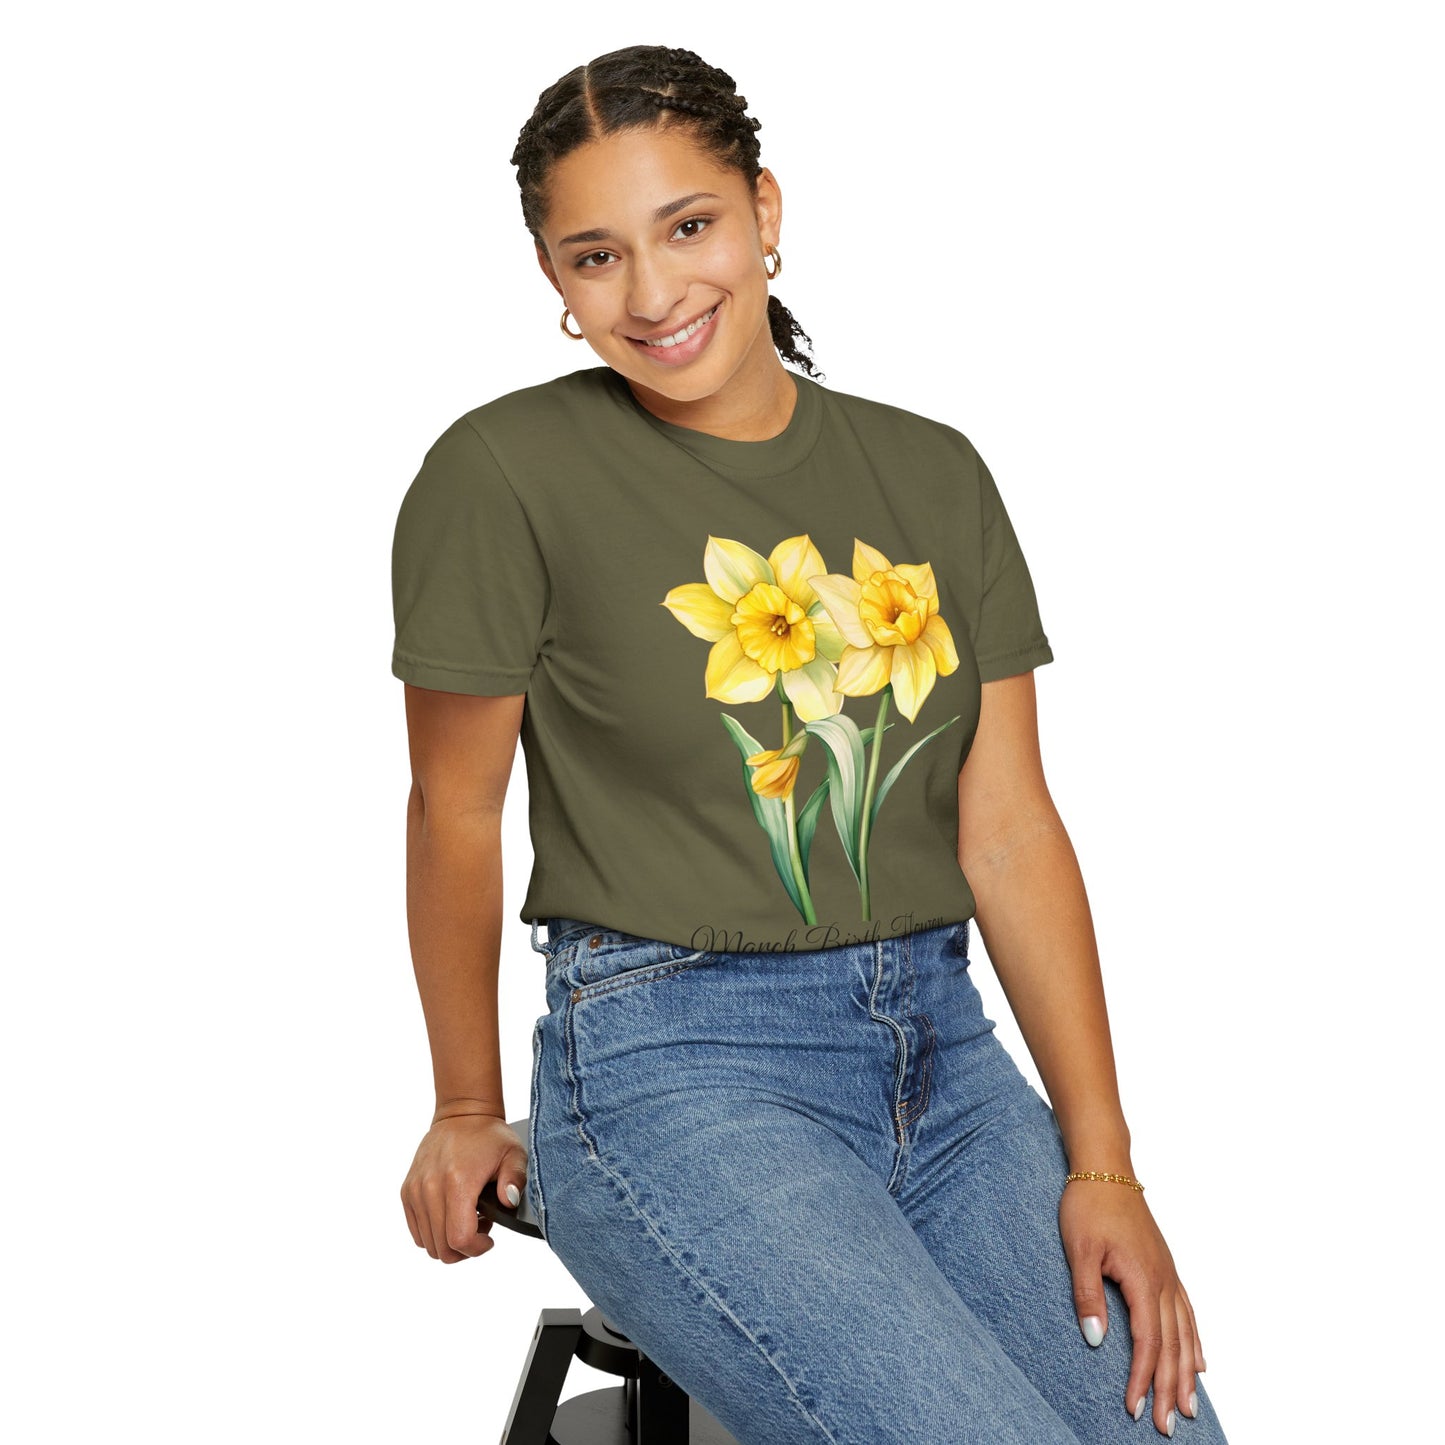 March Birth Flower "Jonquil" - Unisex Garment-Dyed T-shirt